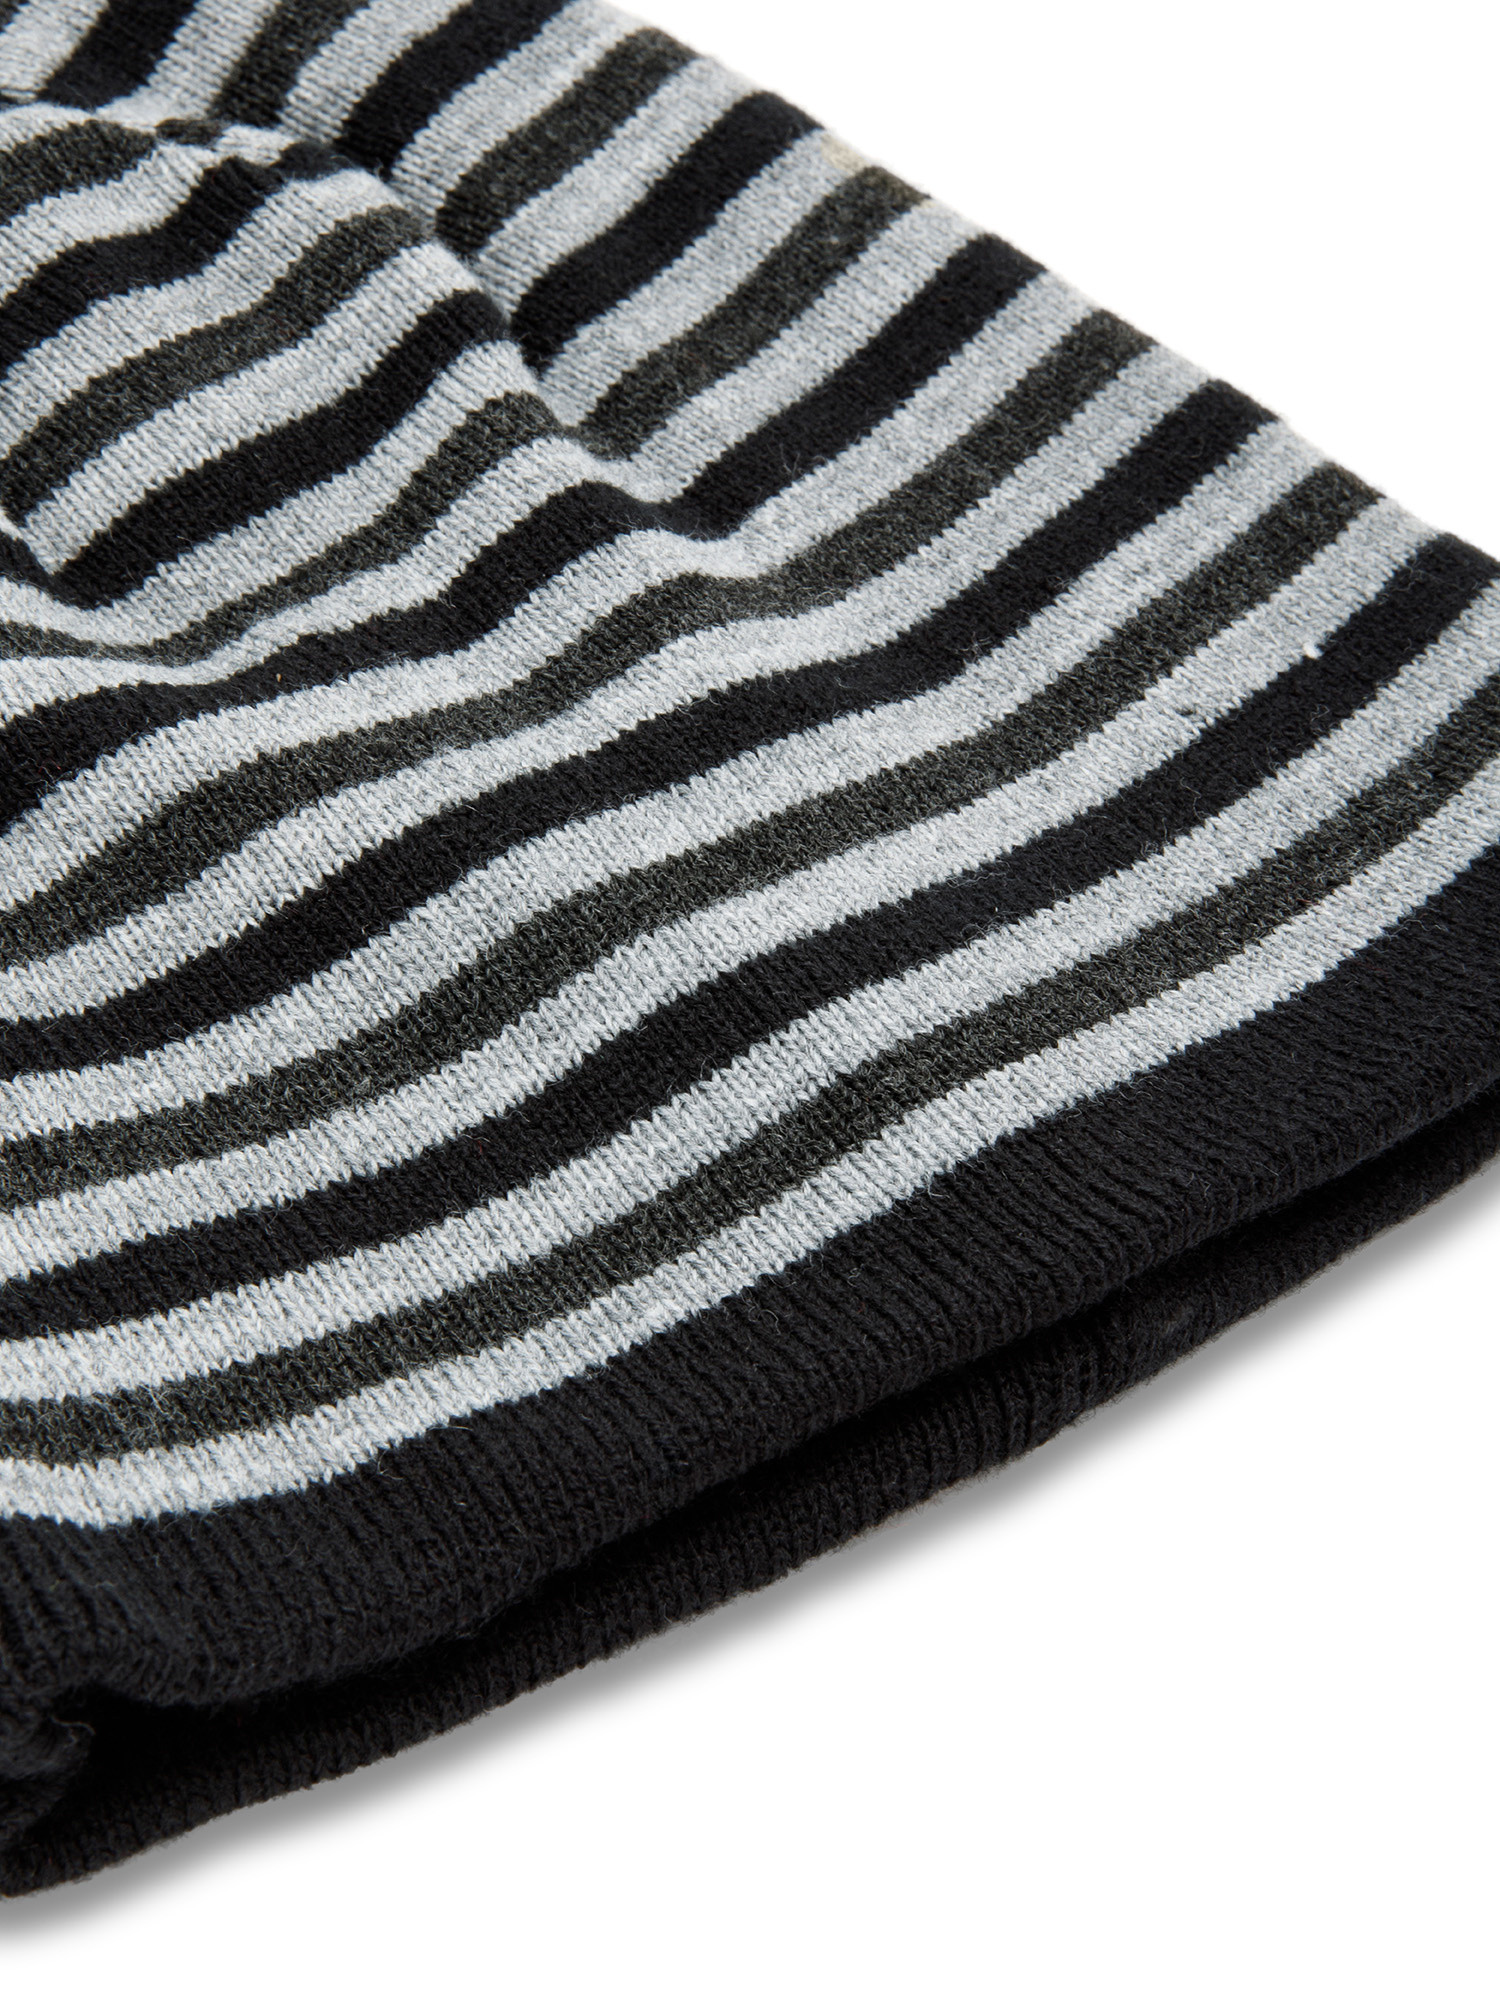 Luca D'Altieri - Striped knit hat, Grey, large image number 1